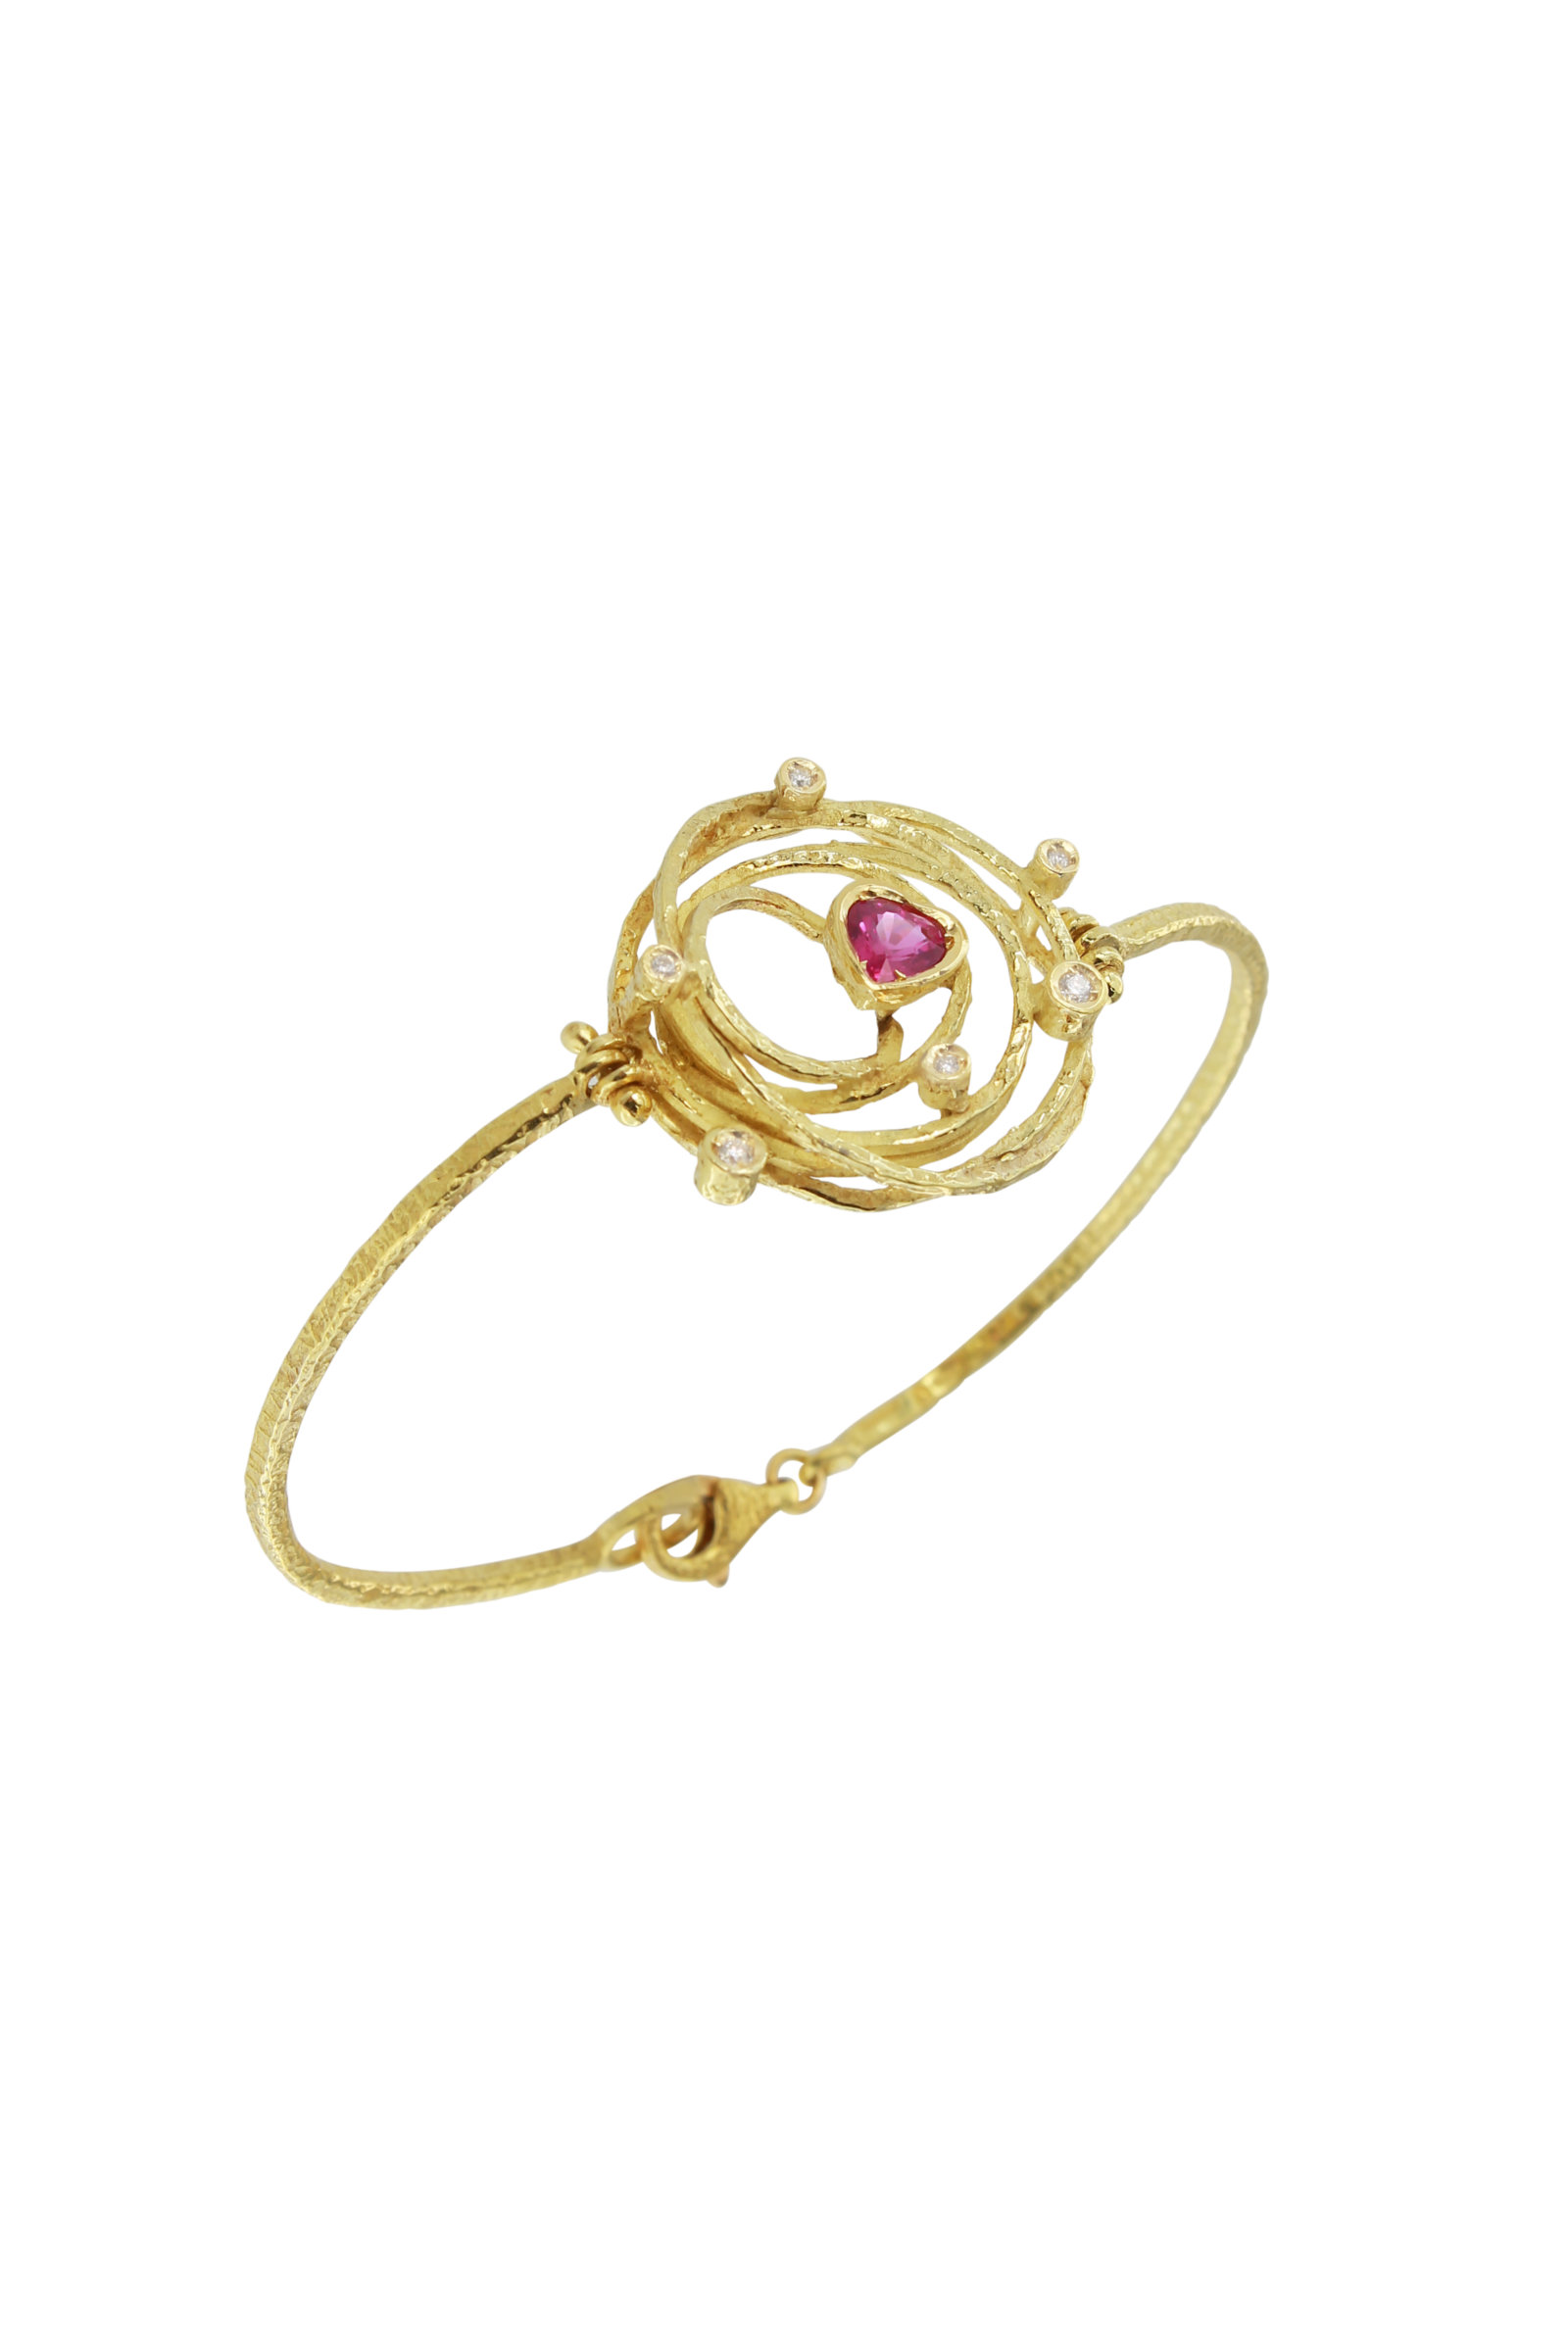 SB306ARU-18-Kt-Yellow-Gold-Bracelet-with-Heart-Ruby-and-Diamonds-1